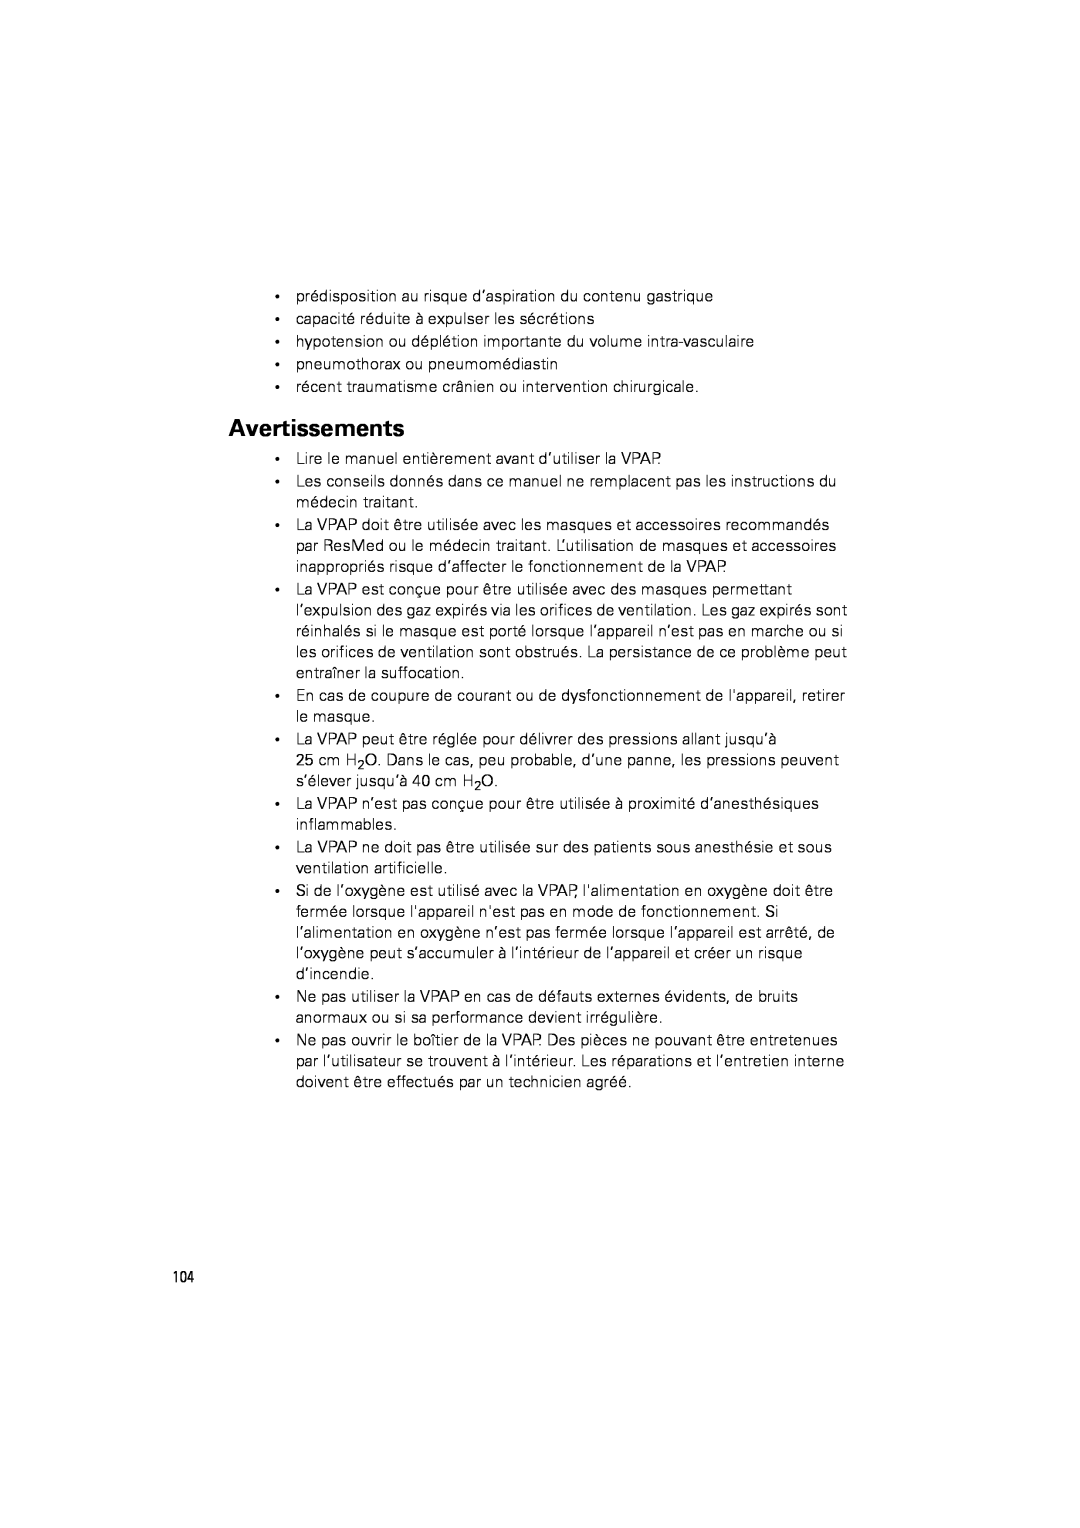 ResMed III & III ST user manual Avertissements 